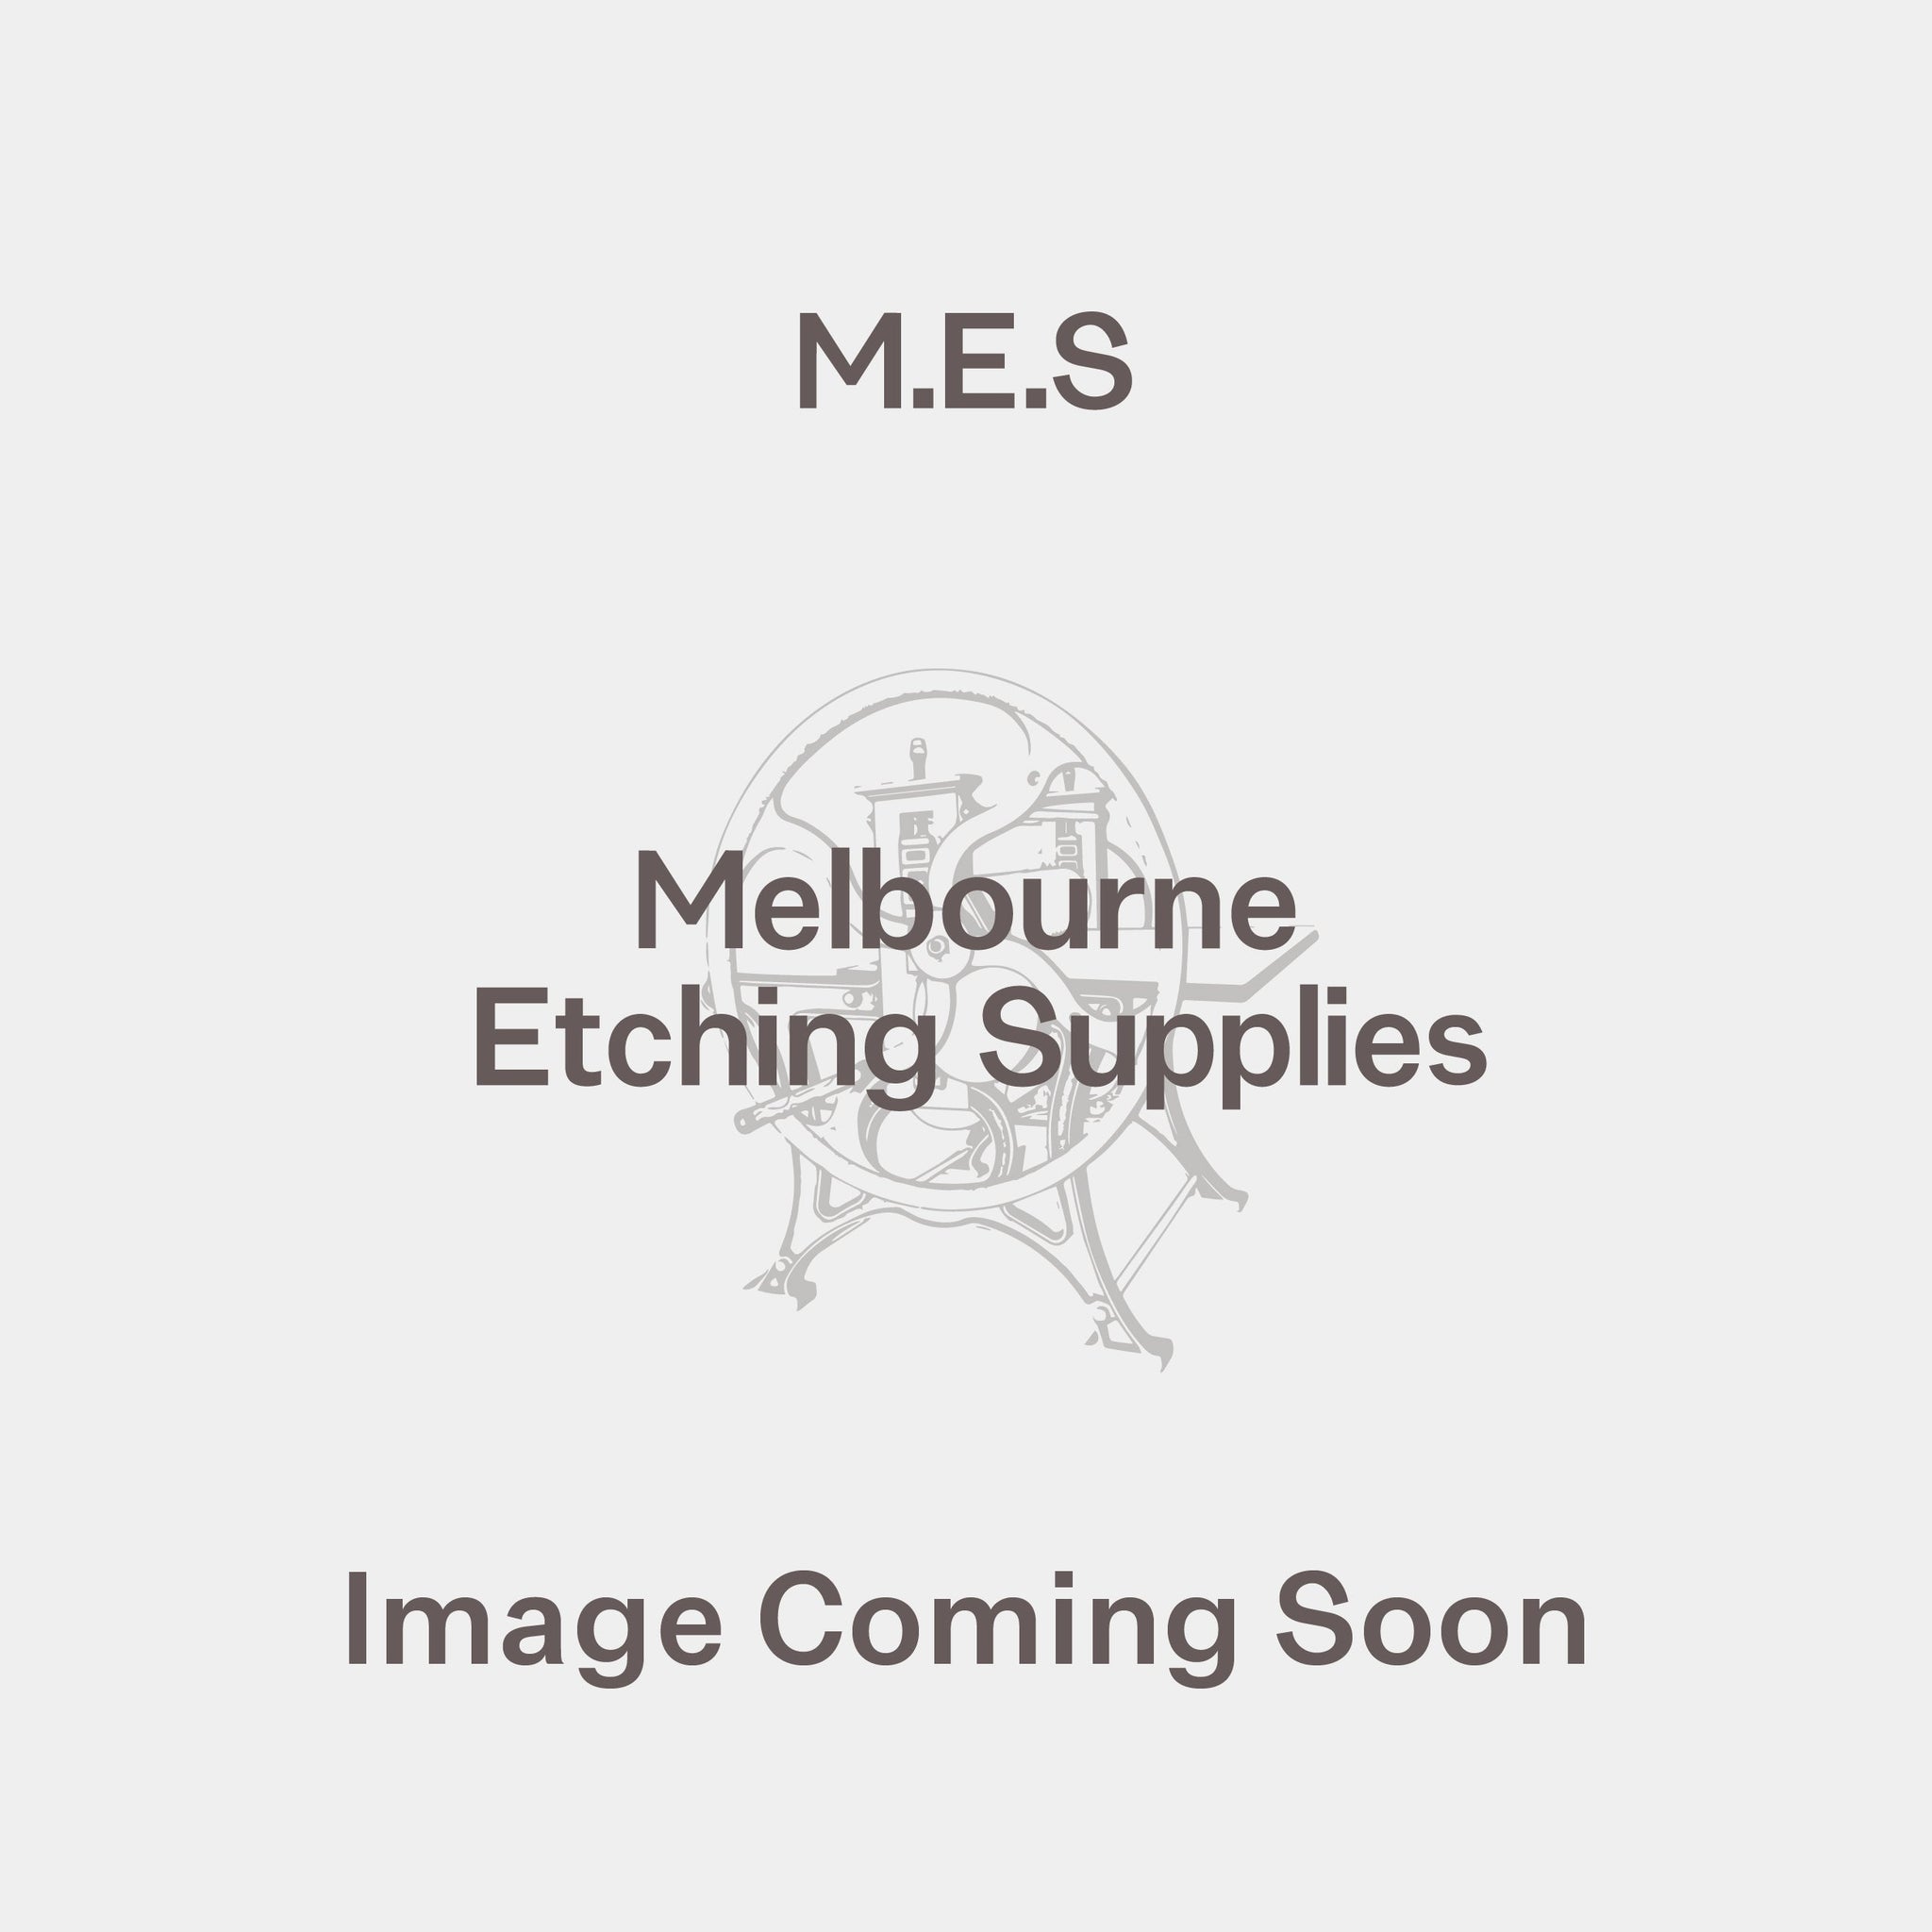 Fabriano Artistico Watercolour Rolls - Melbourne Etching Supplies